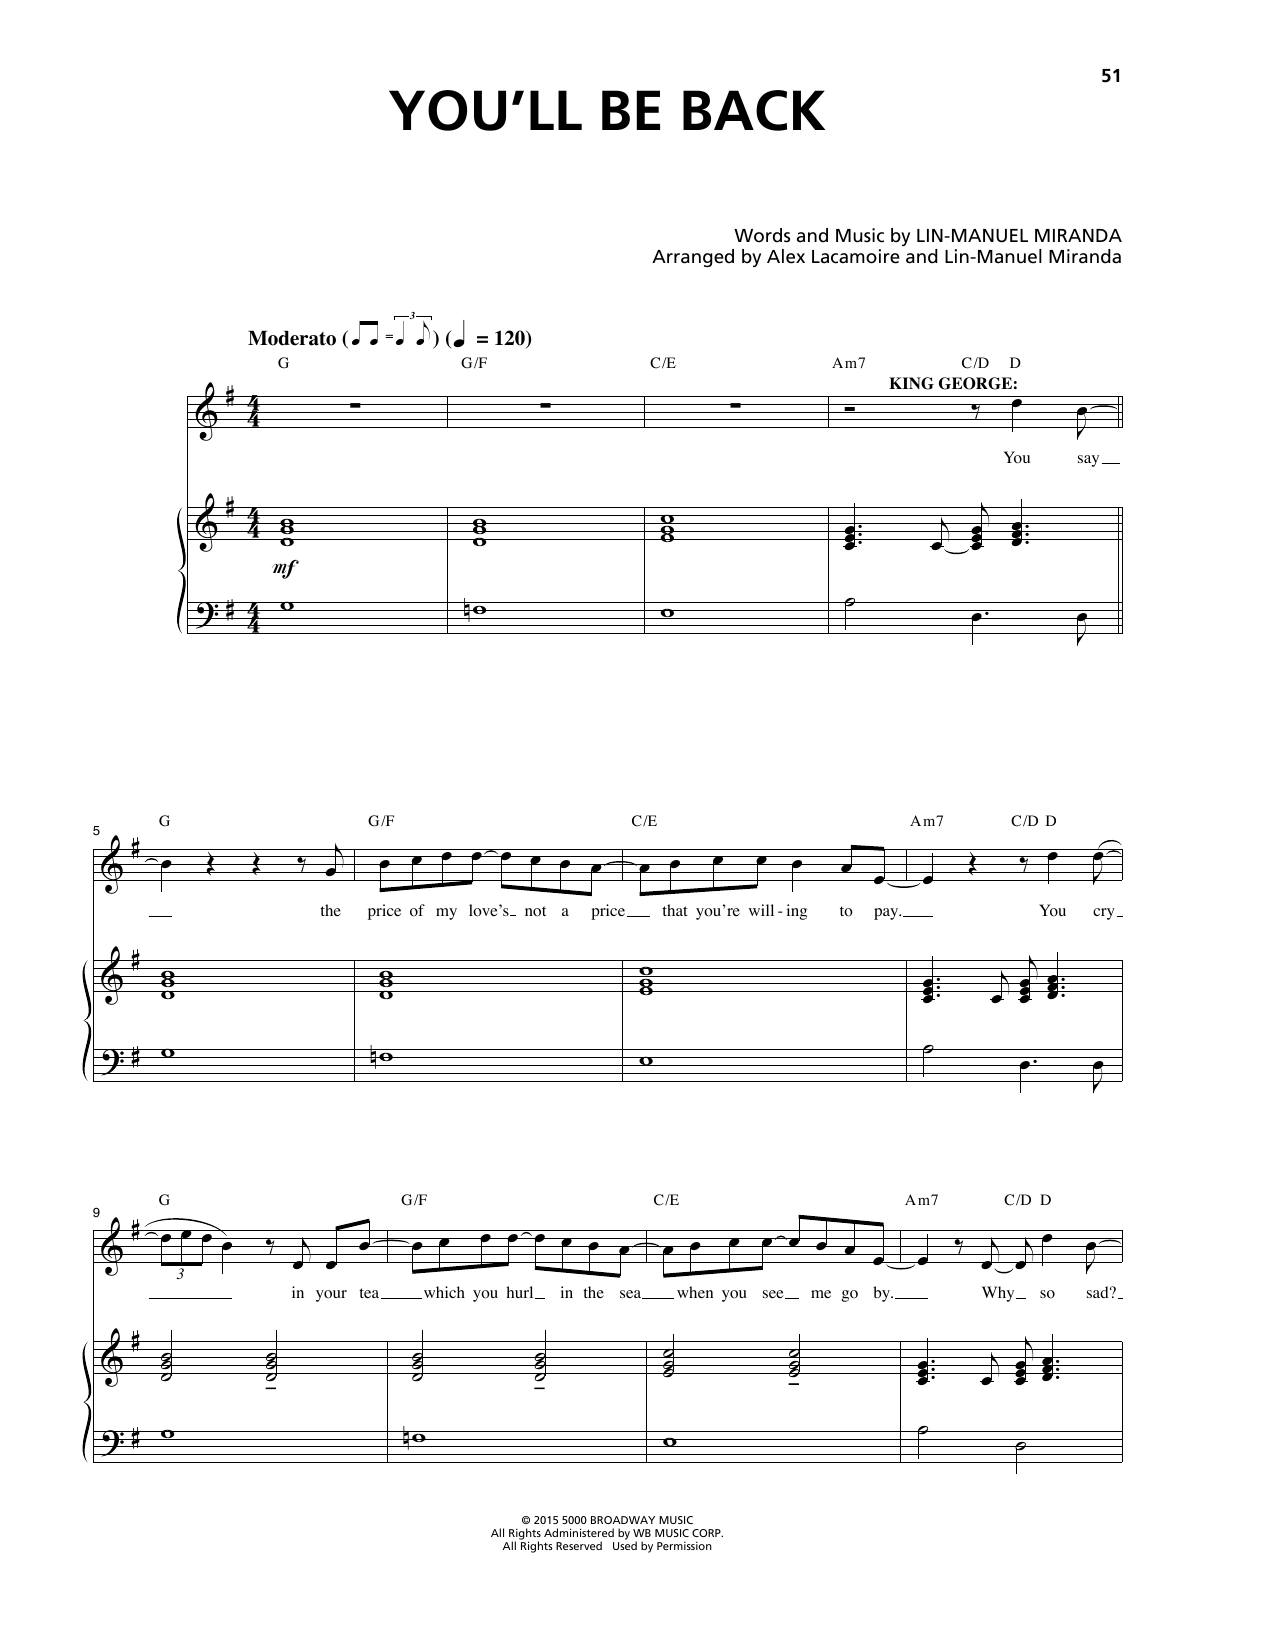 Lin-Manuel Miranda You'll Be Back (from Hamilton) Sheet Music Notes & Chords for Ukulele - Download or Print PDF